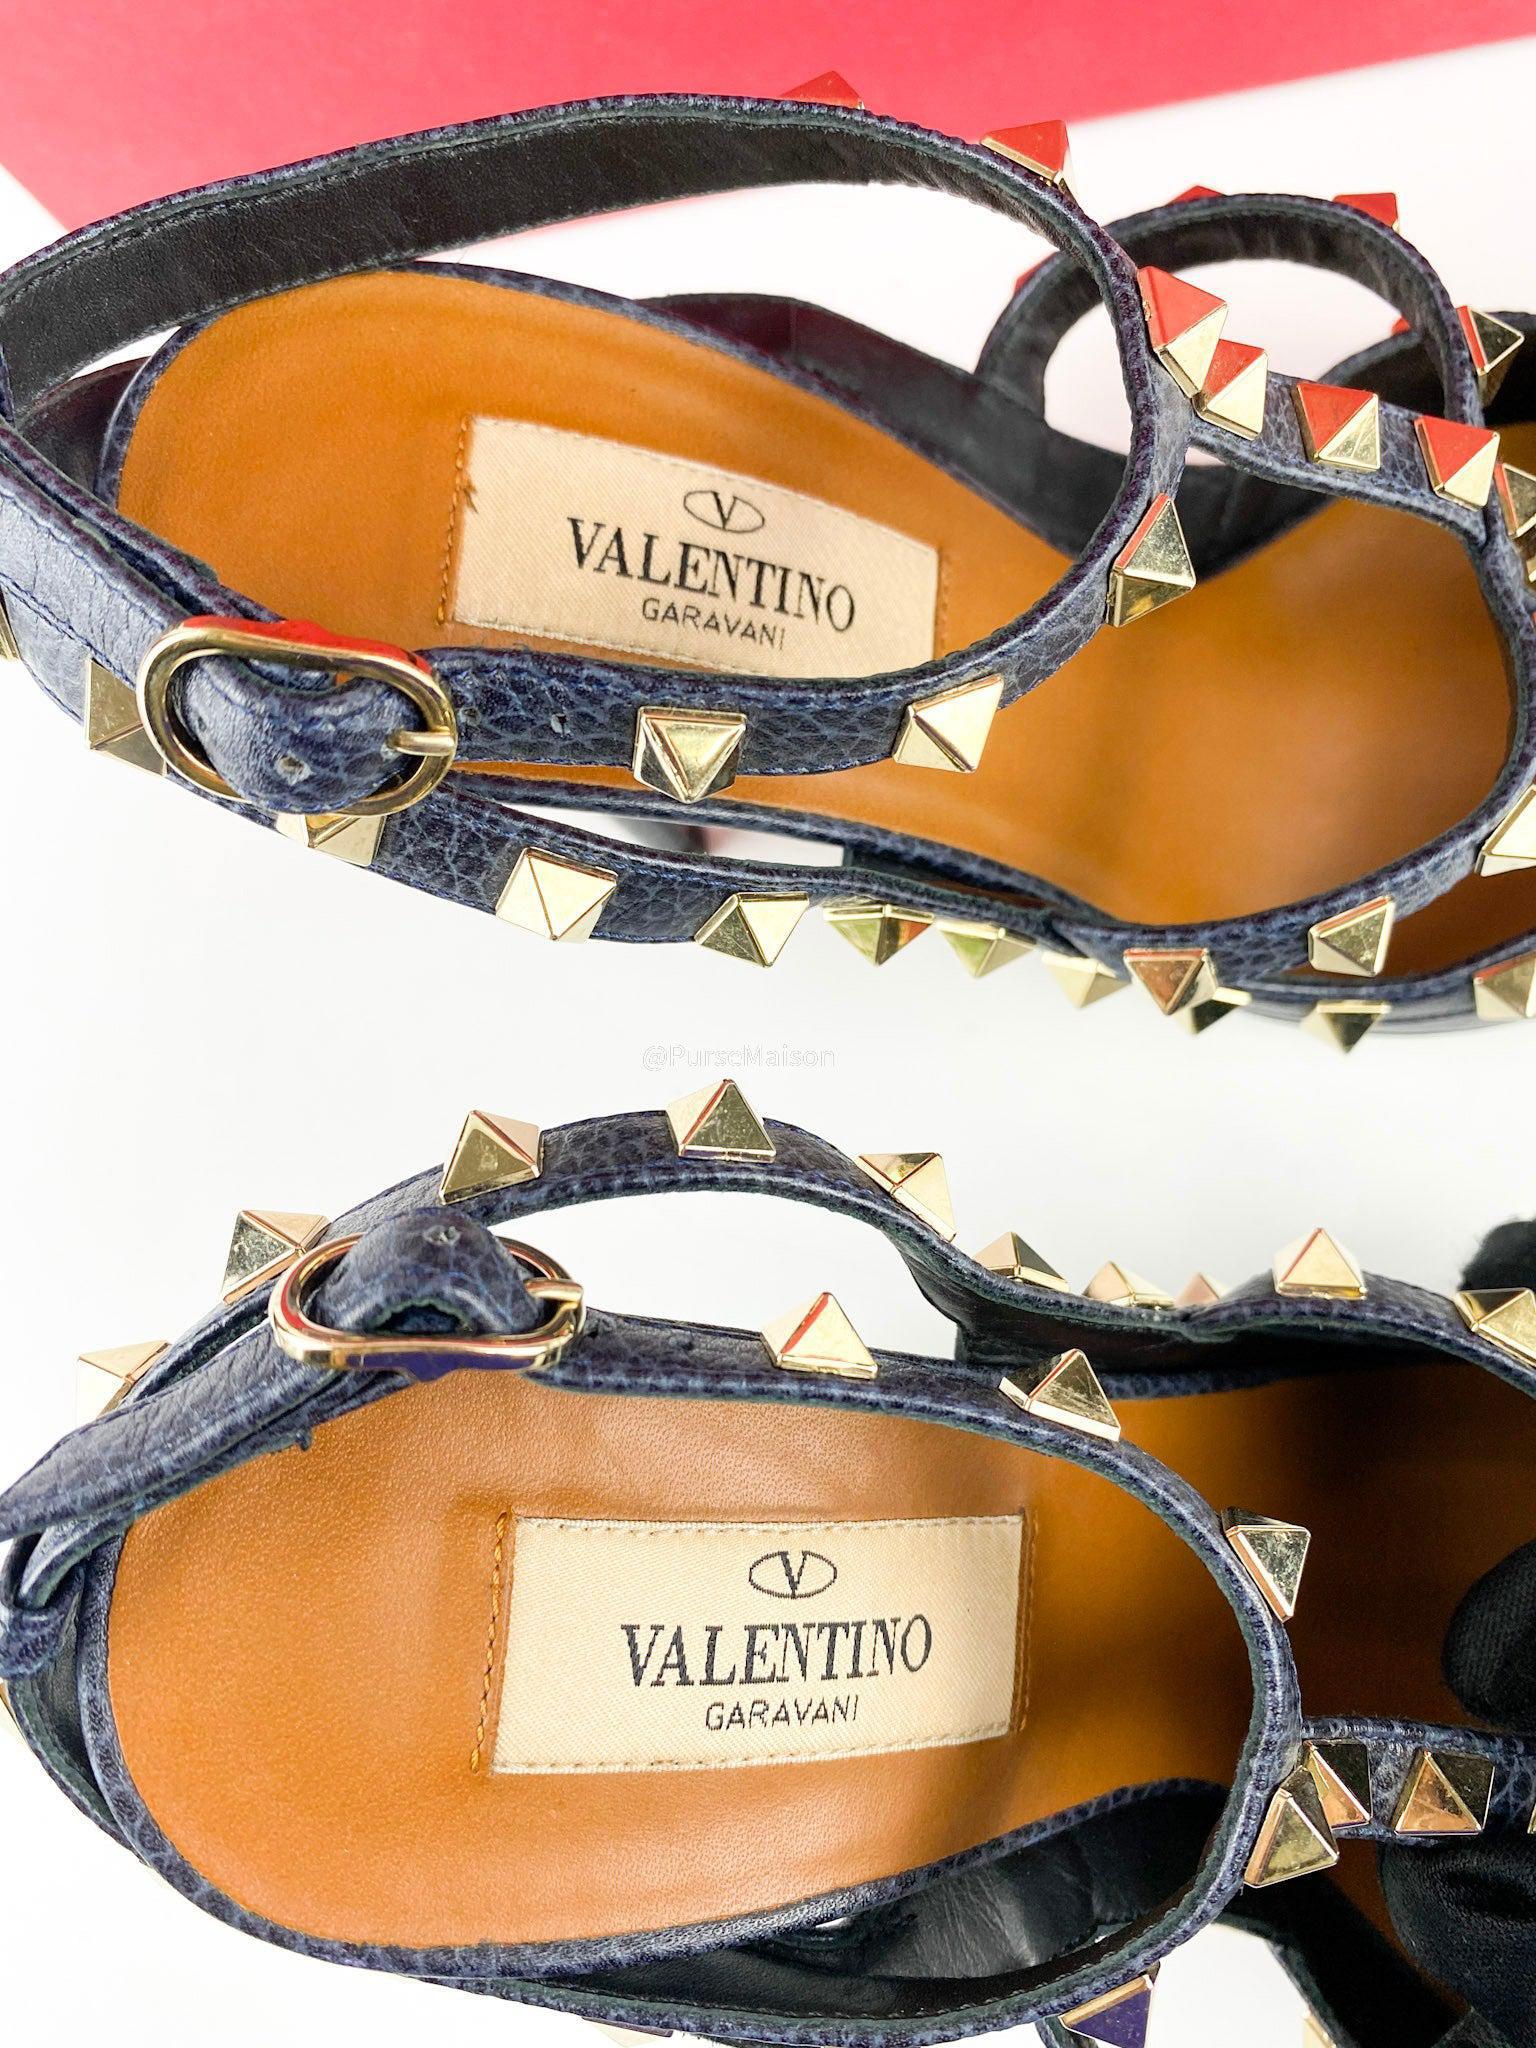 Valentino Garavani Rockstud High heels Ankle Strap size 37EU (24.5cm)